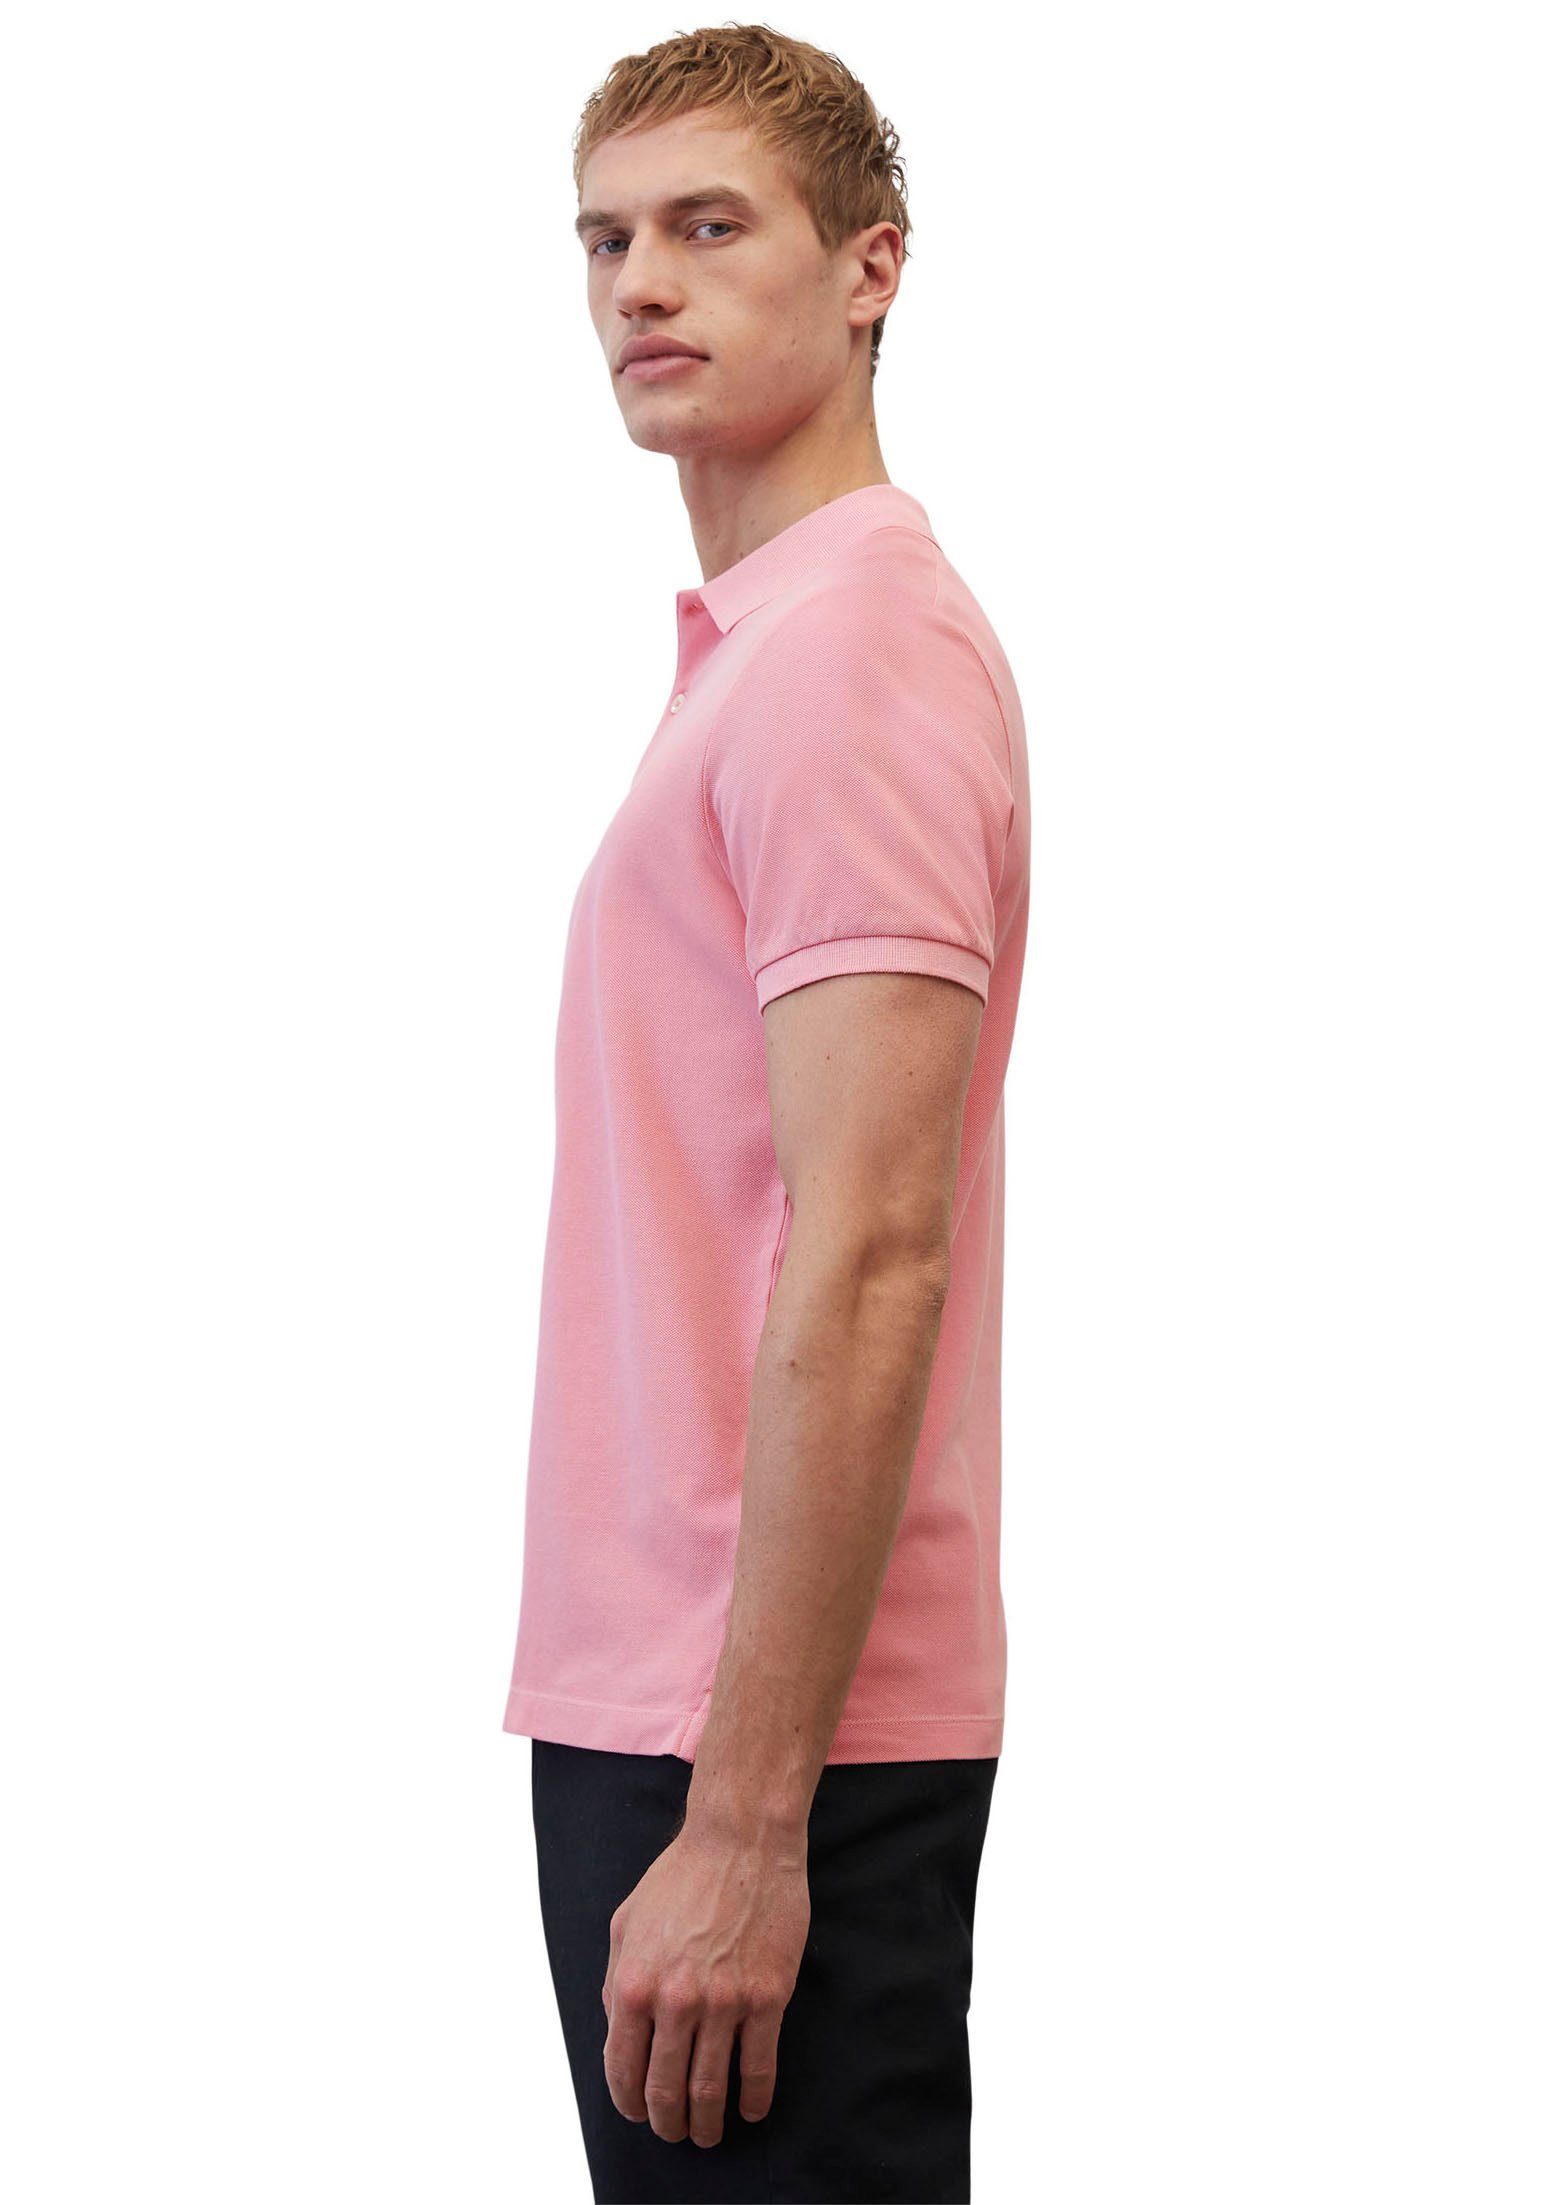 Marc klassischen Look O'Polo pink Poloshirt im